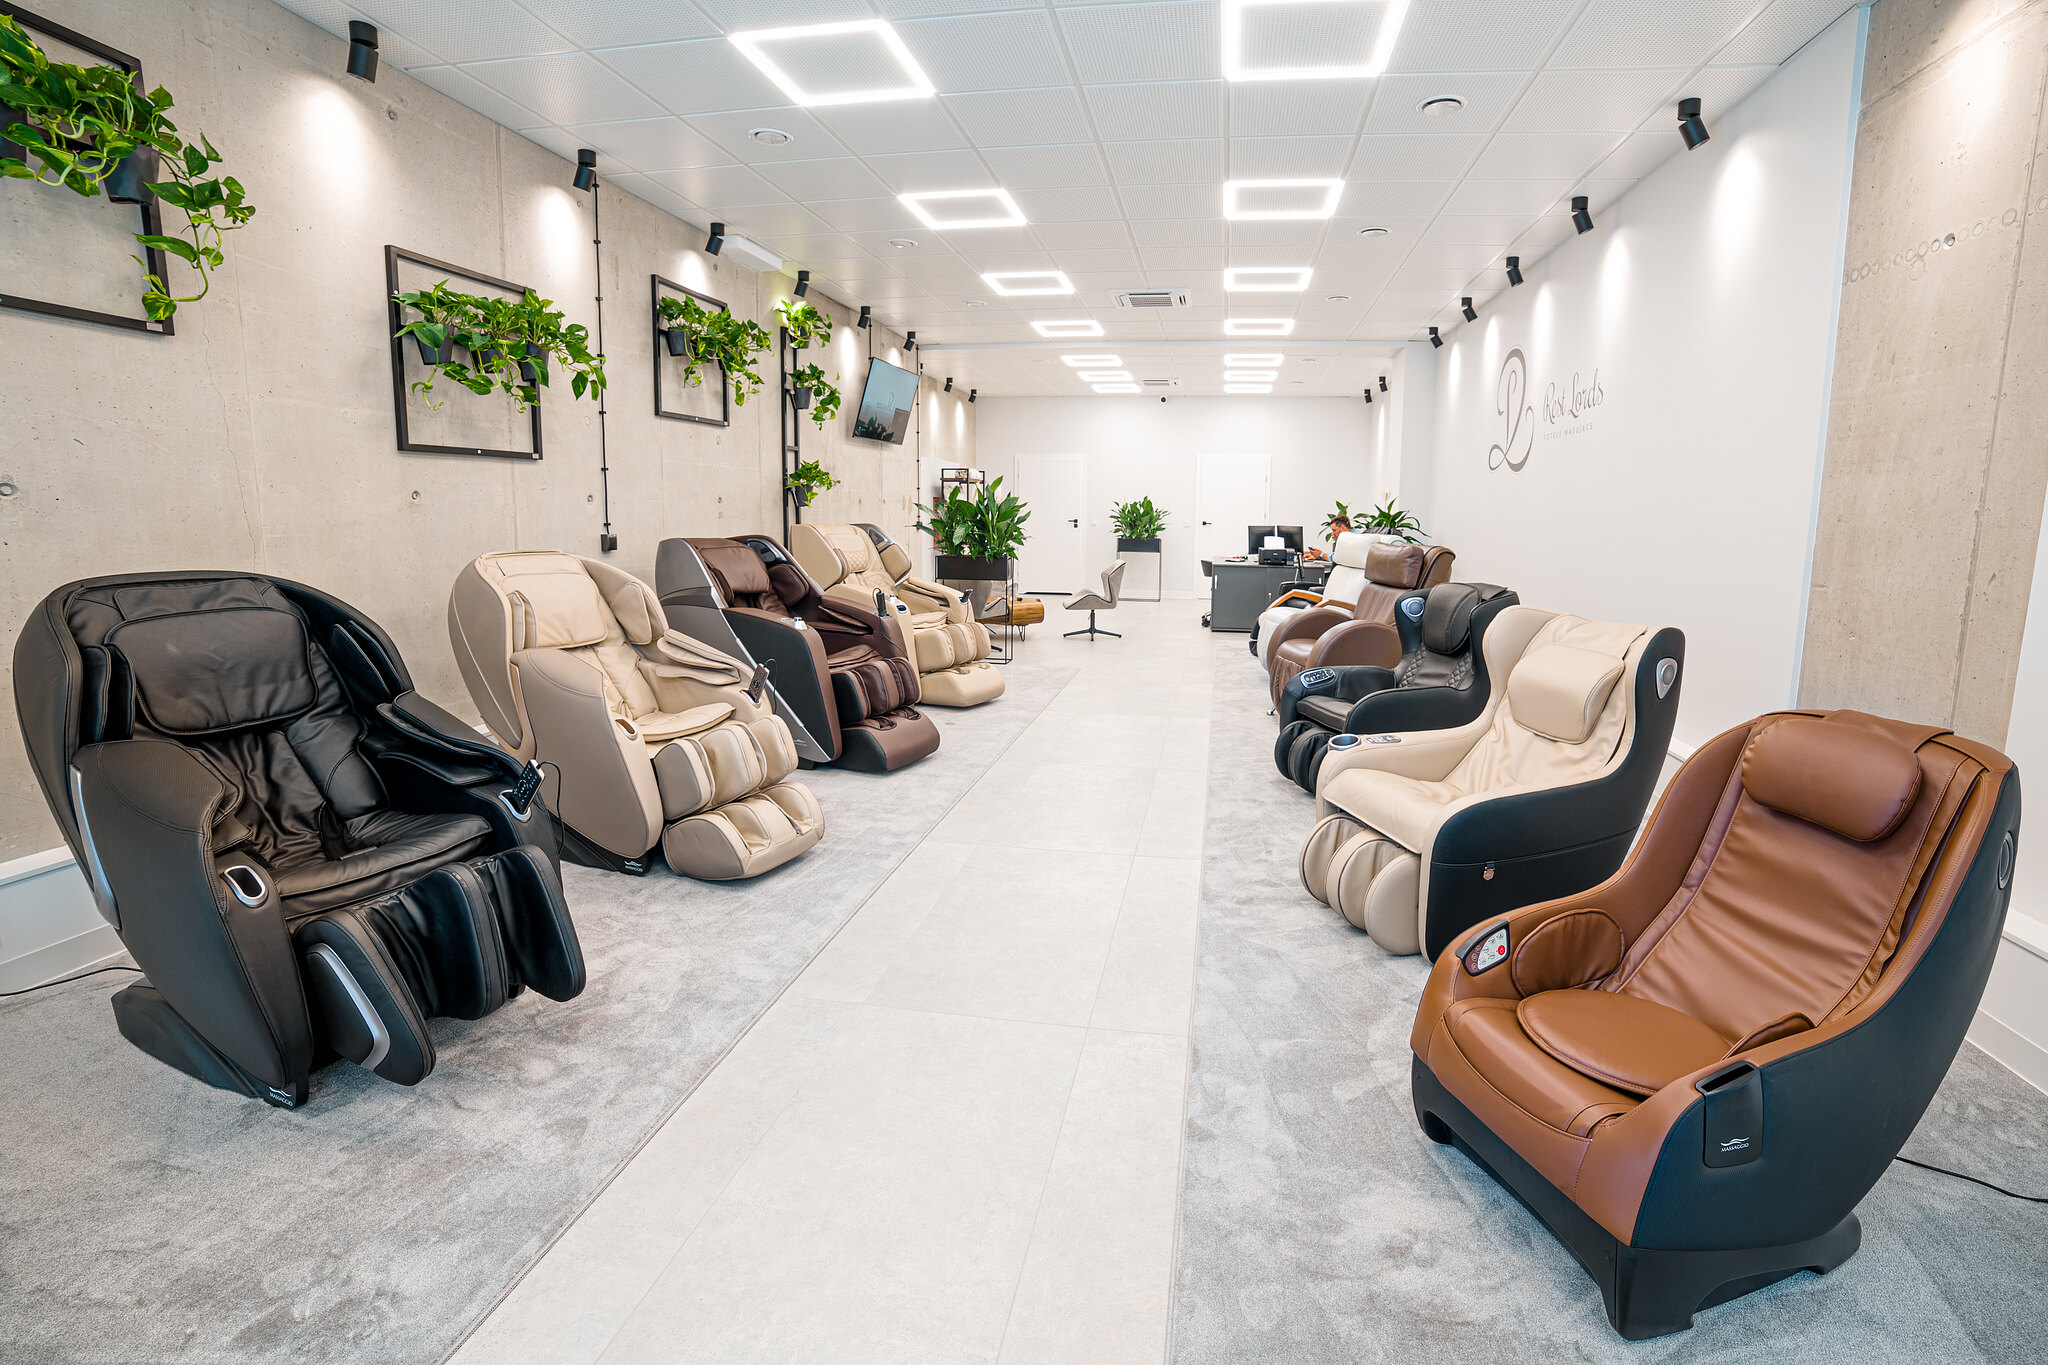 Massage chair showroom in Wrocław